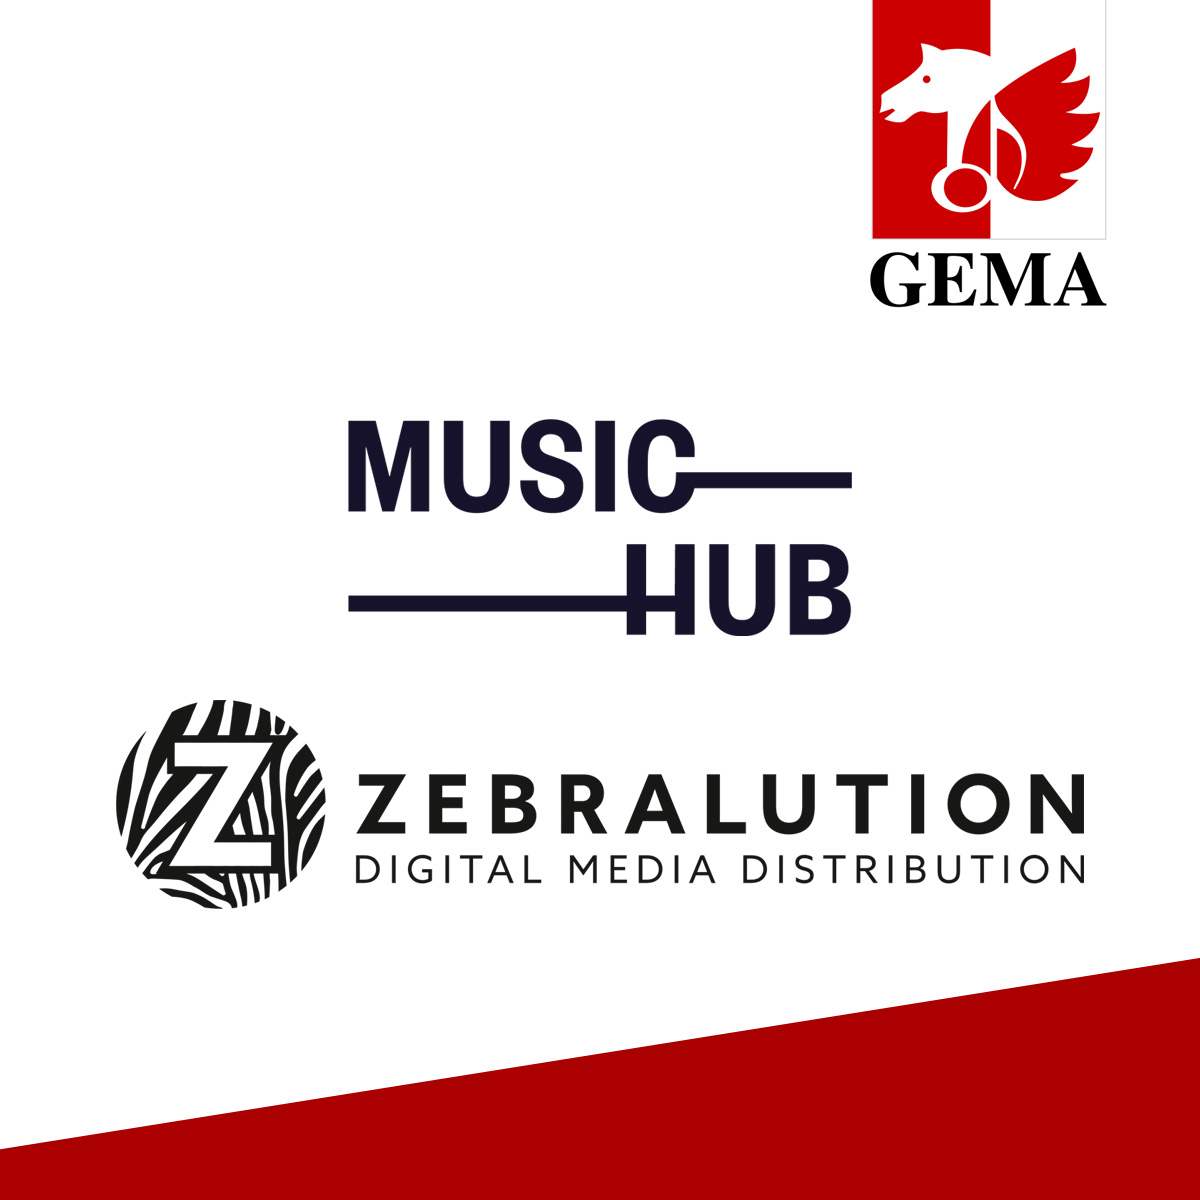 GEMA_MusicHub_Zebralution.jpg